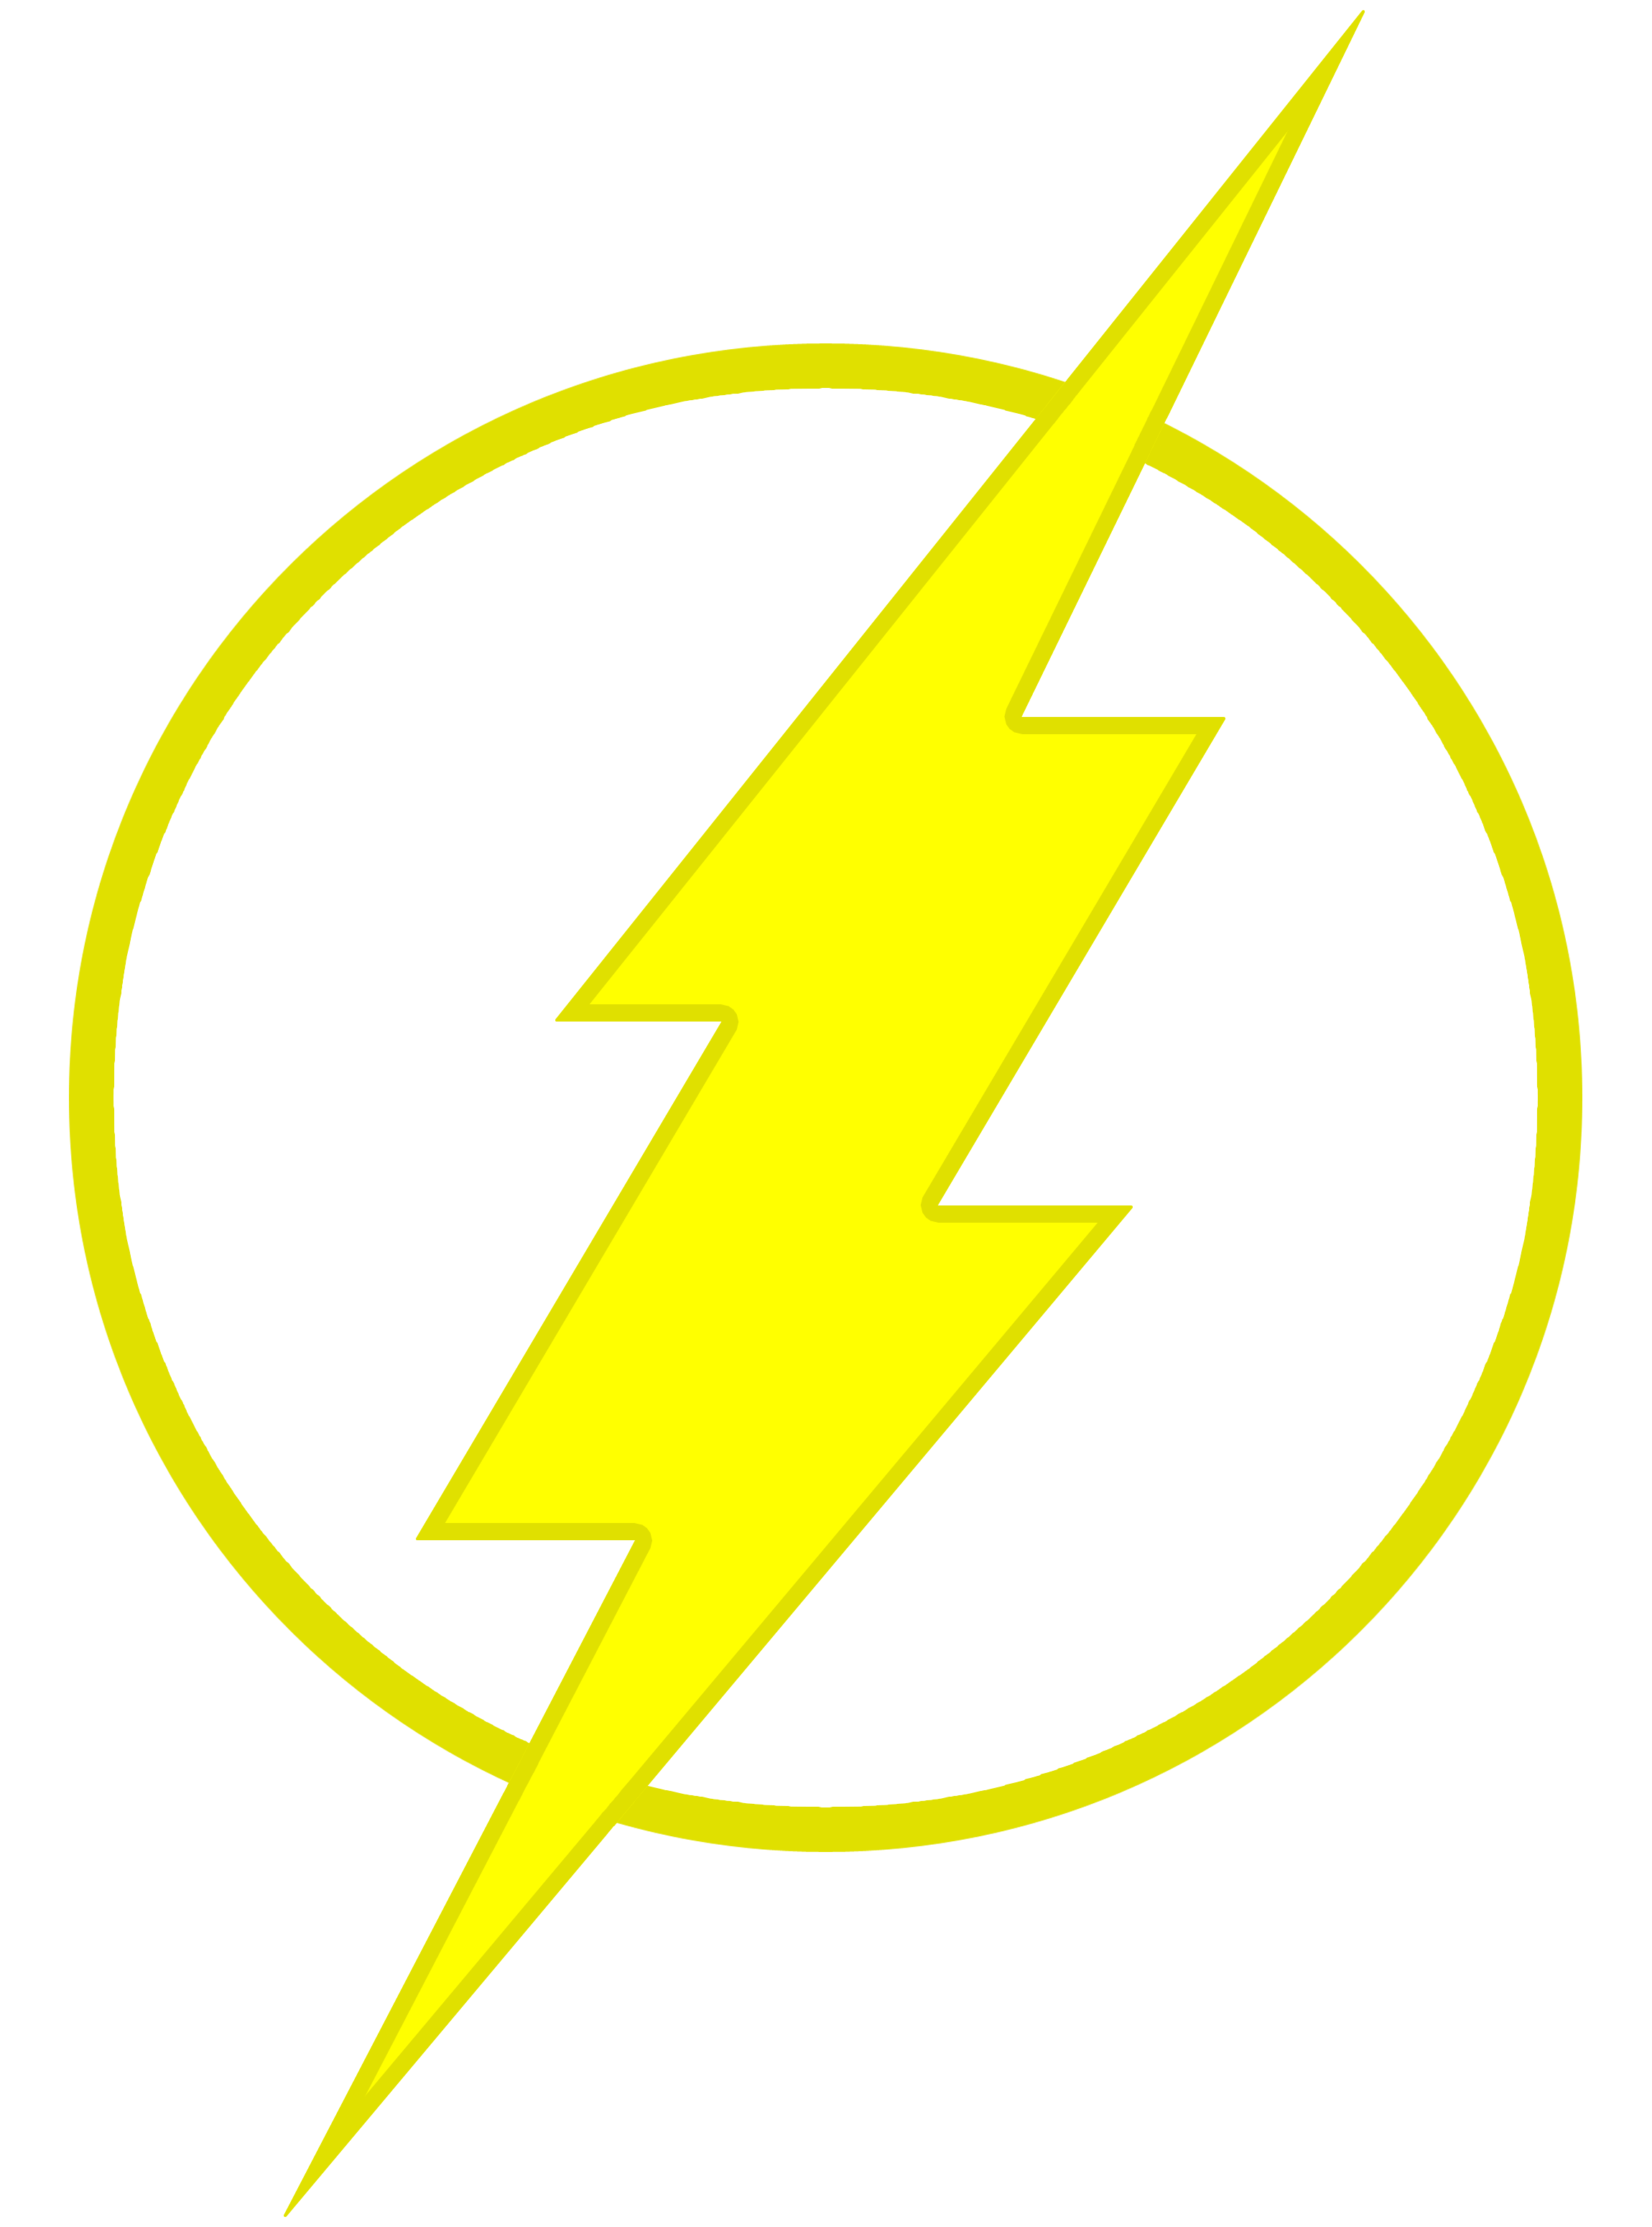 Молния символ. Значок молнии. Эмблема флеша. Логотип команды молния. Flash lightning